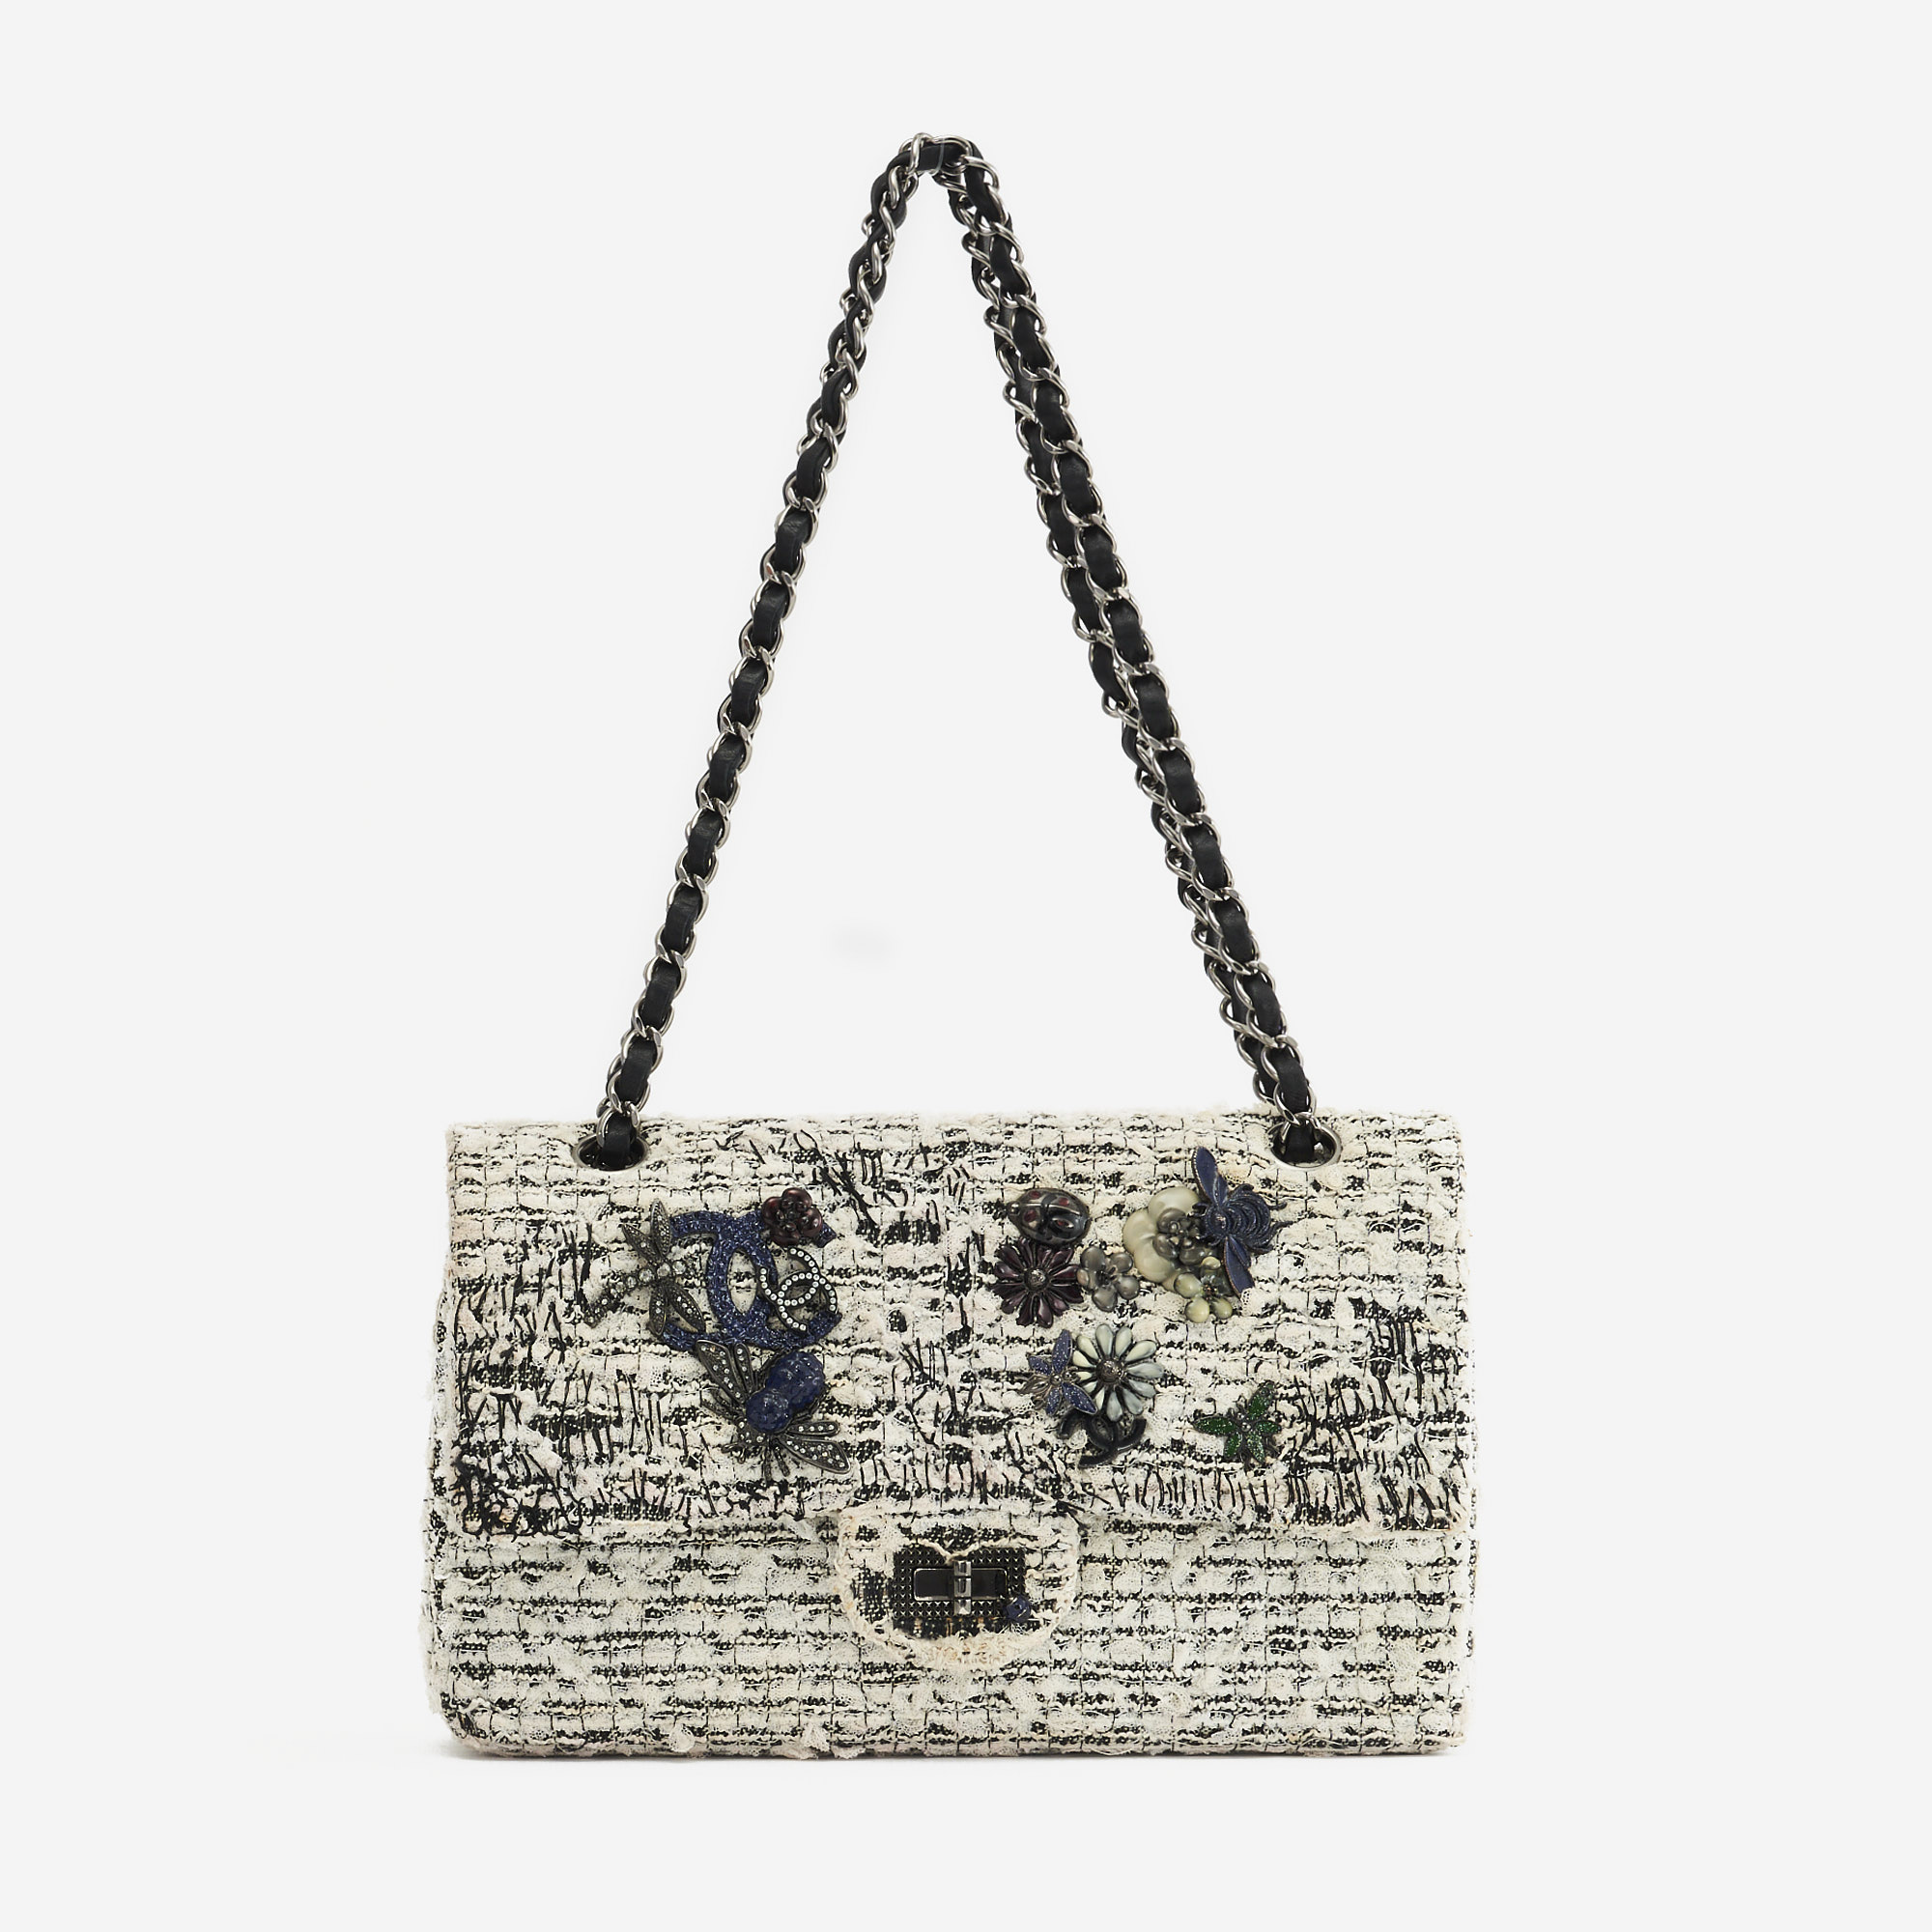 tweed chanel handbag white